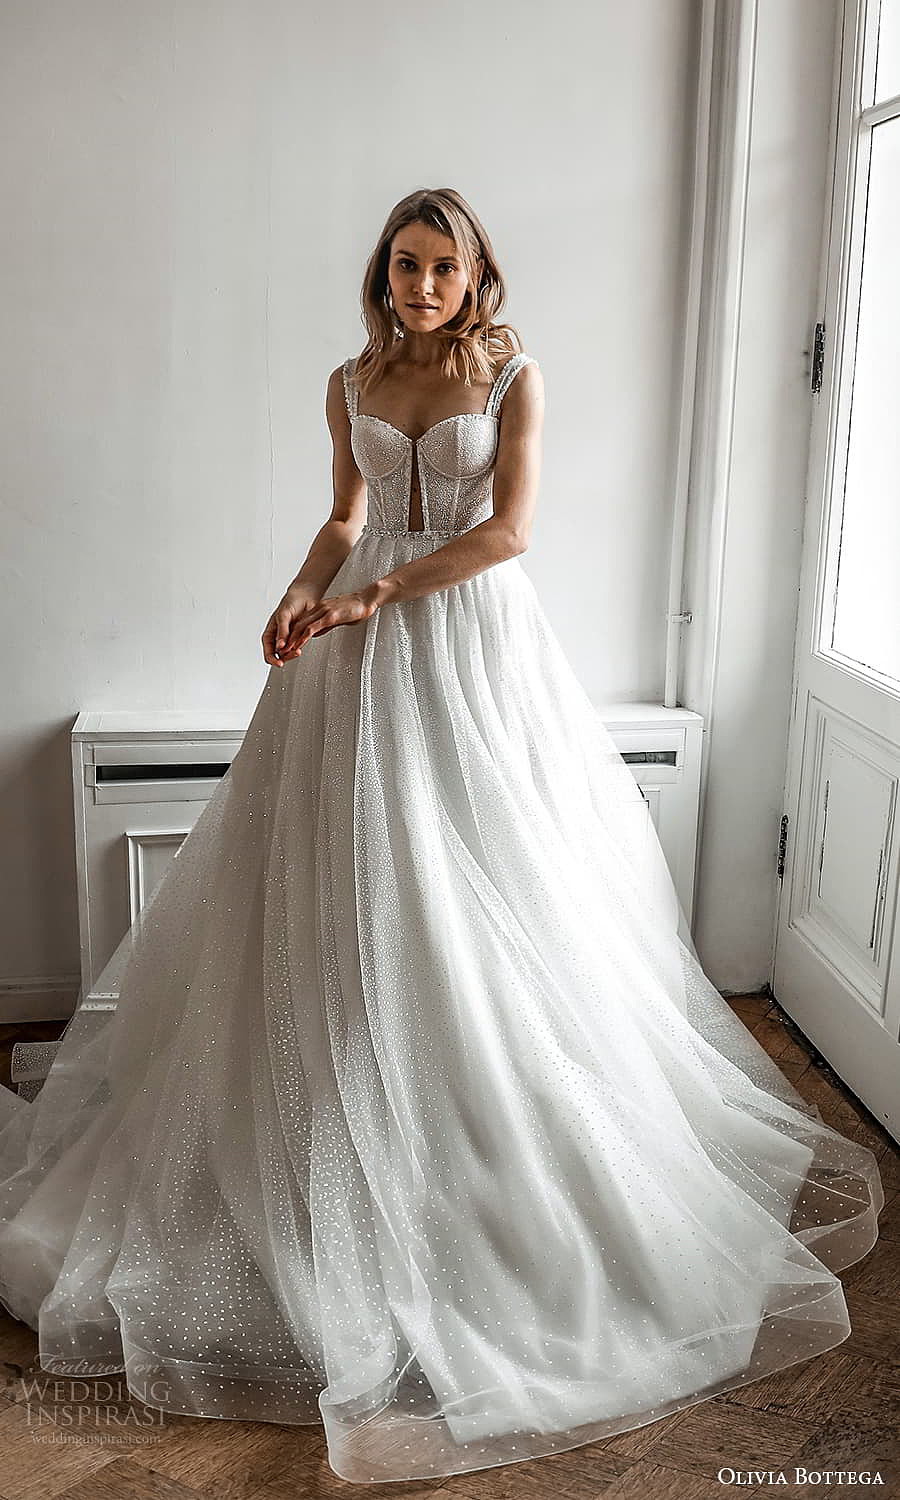 Olivia Bottega Pret-a-Porter 新娘系列 优雅百搭新娘嫁衣 - 36